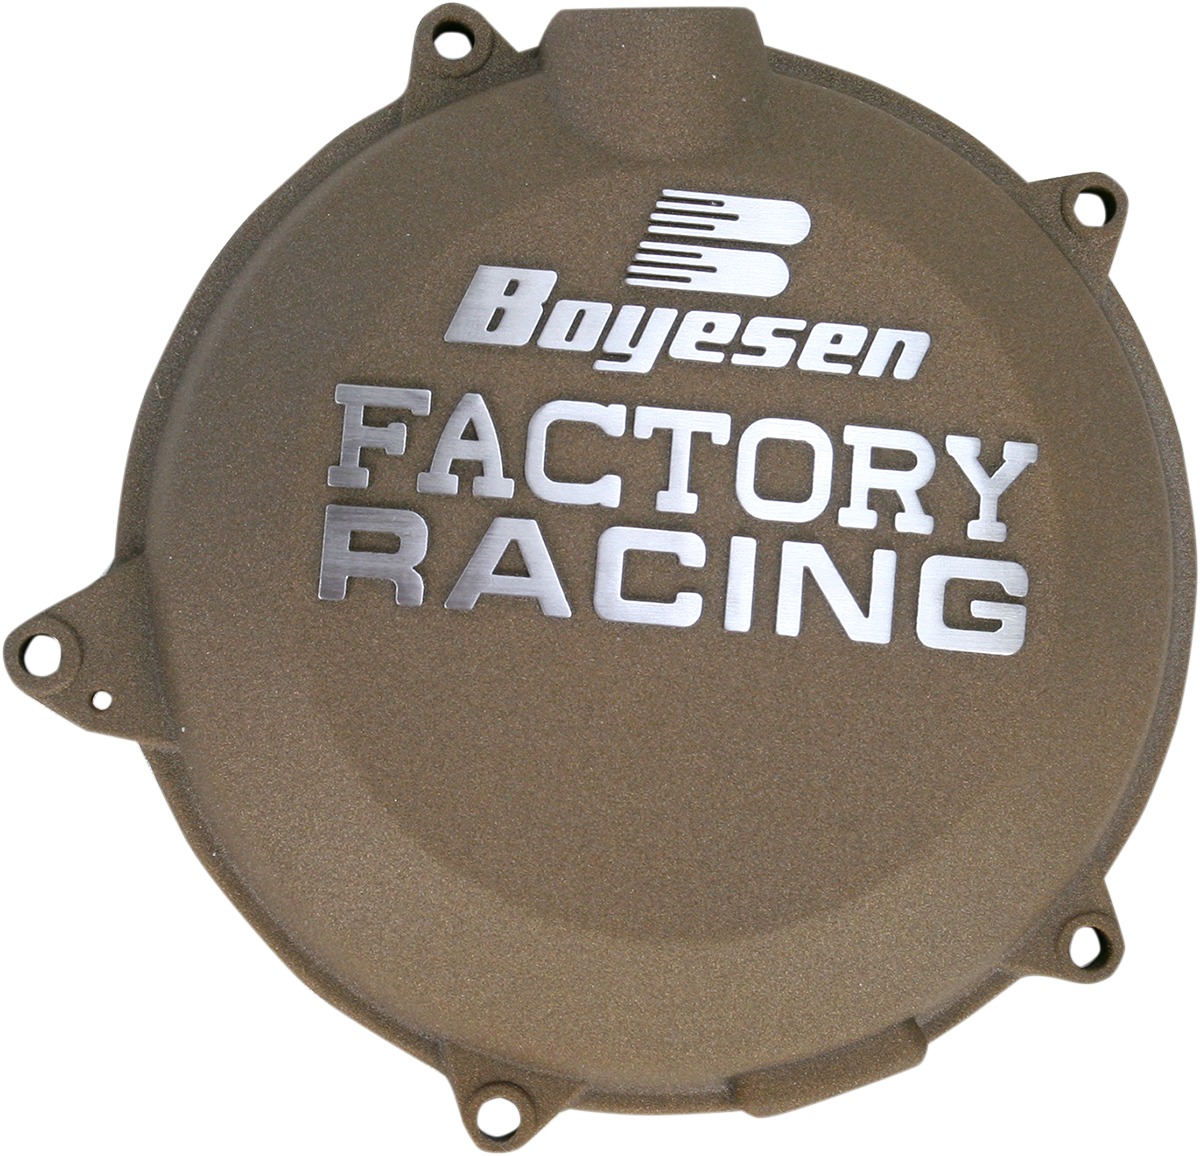 Factory Racing Clutch Cover Magnesium - For 11-16 Husqvarna KTM Husaberg - Click Image to Close